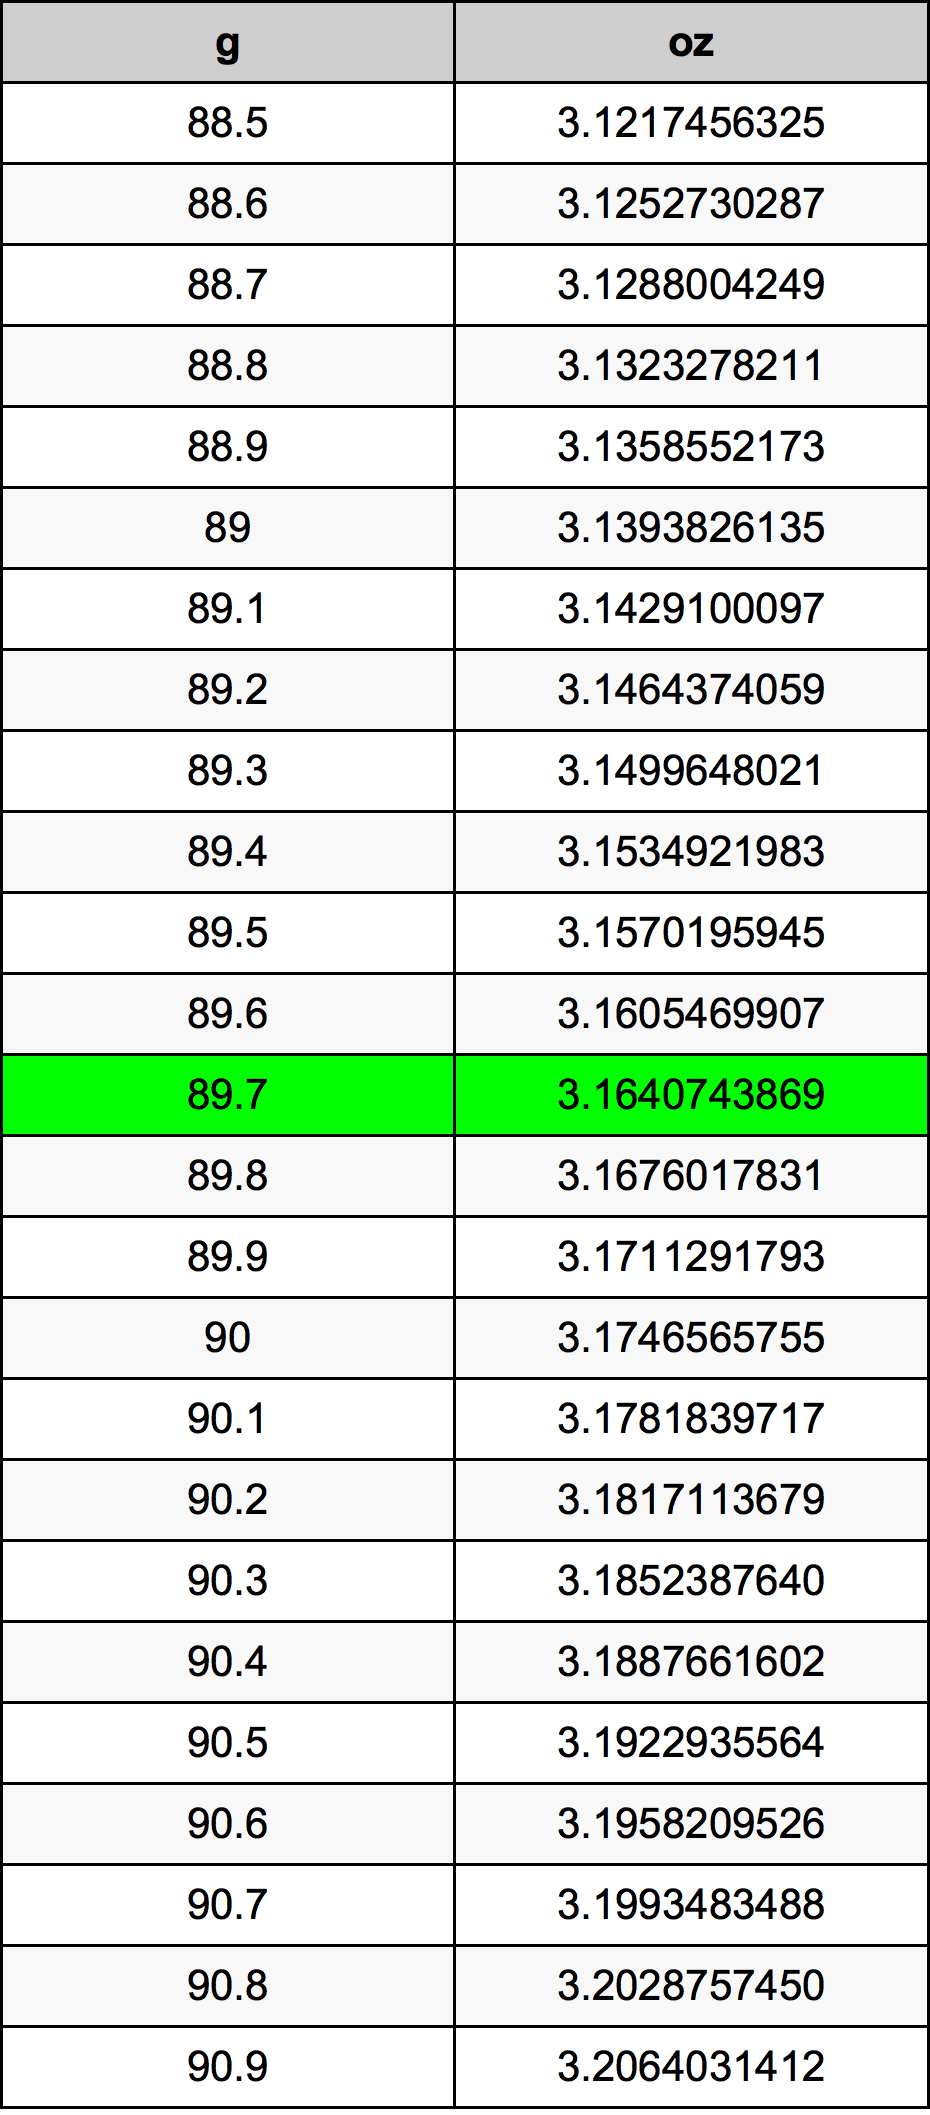 89.7 غرام جدول تحويل